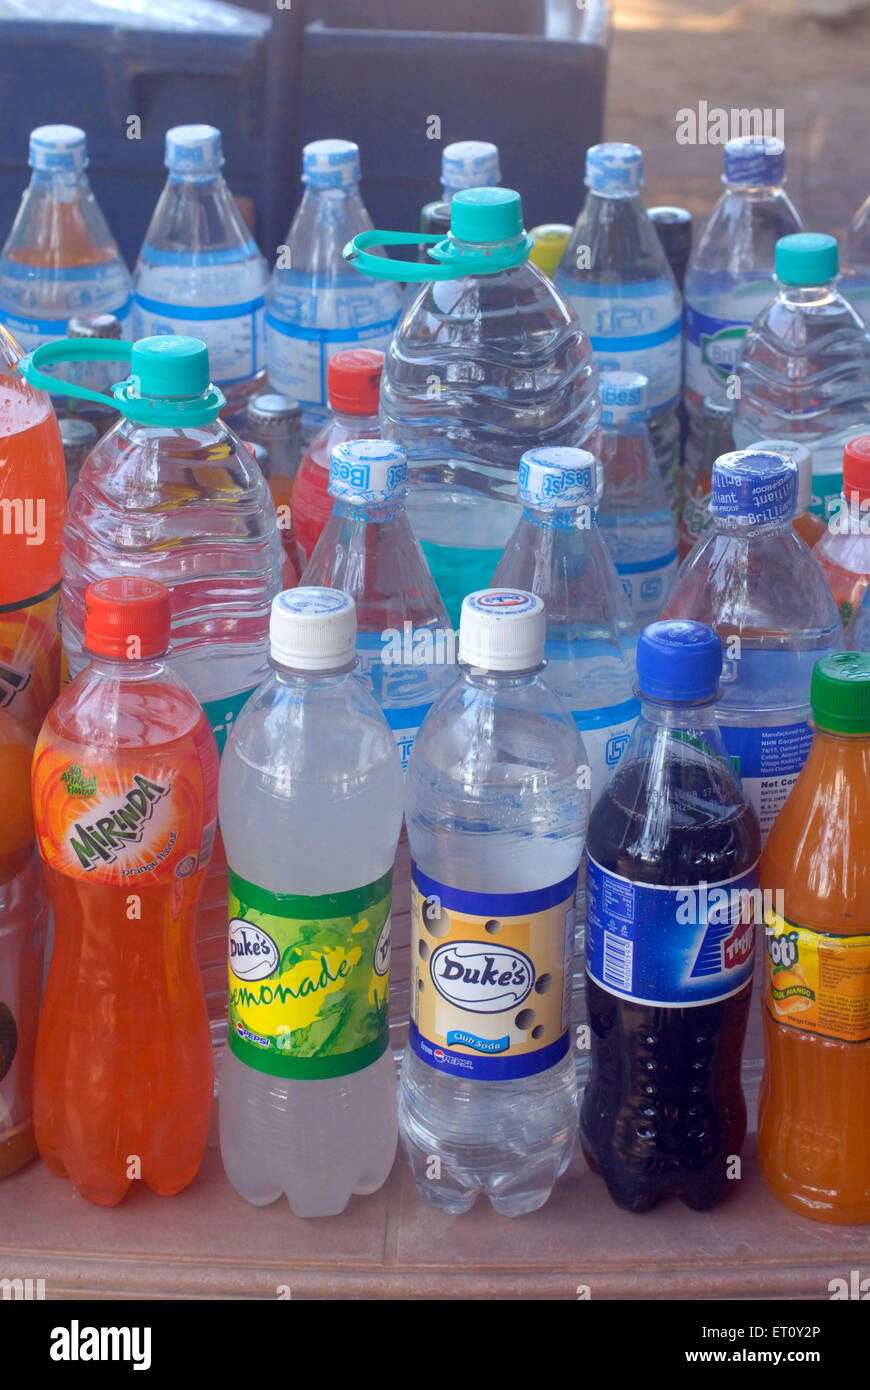 https://c8.alamy.com/comp/ET0Y2P/pet-plastic-bottle-polyethylene-terephthalate-cold-drinks-water-bottles-ET0Y2P.jpg